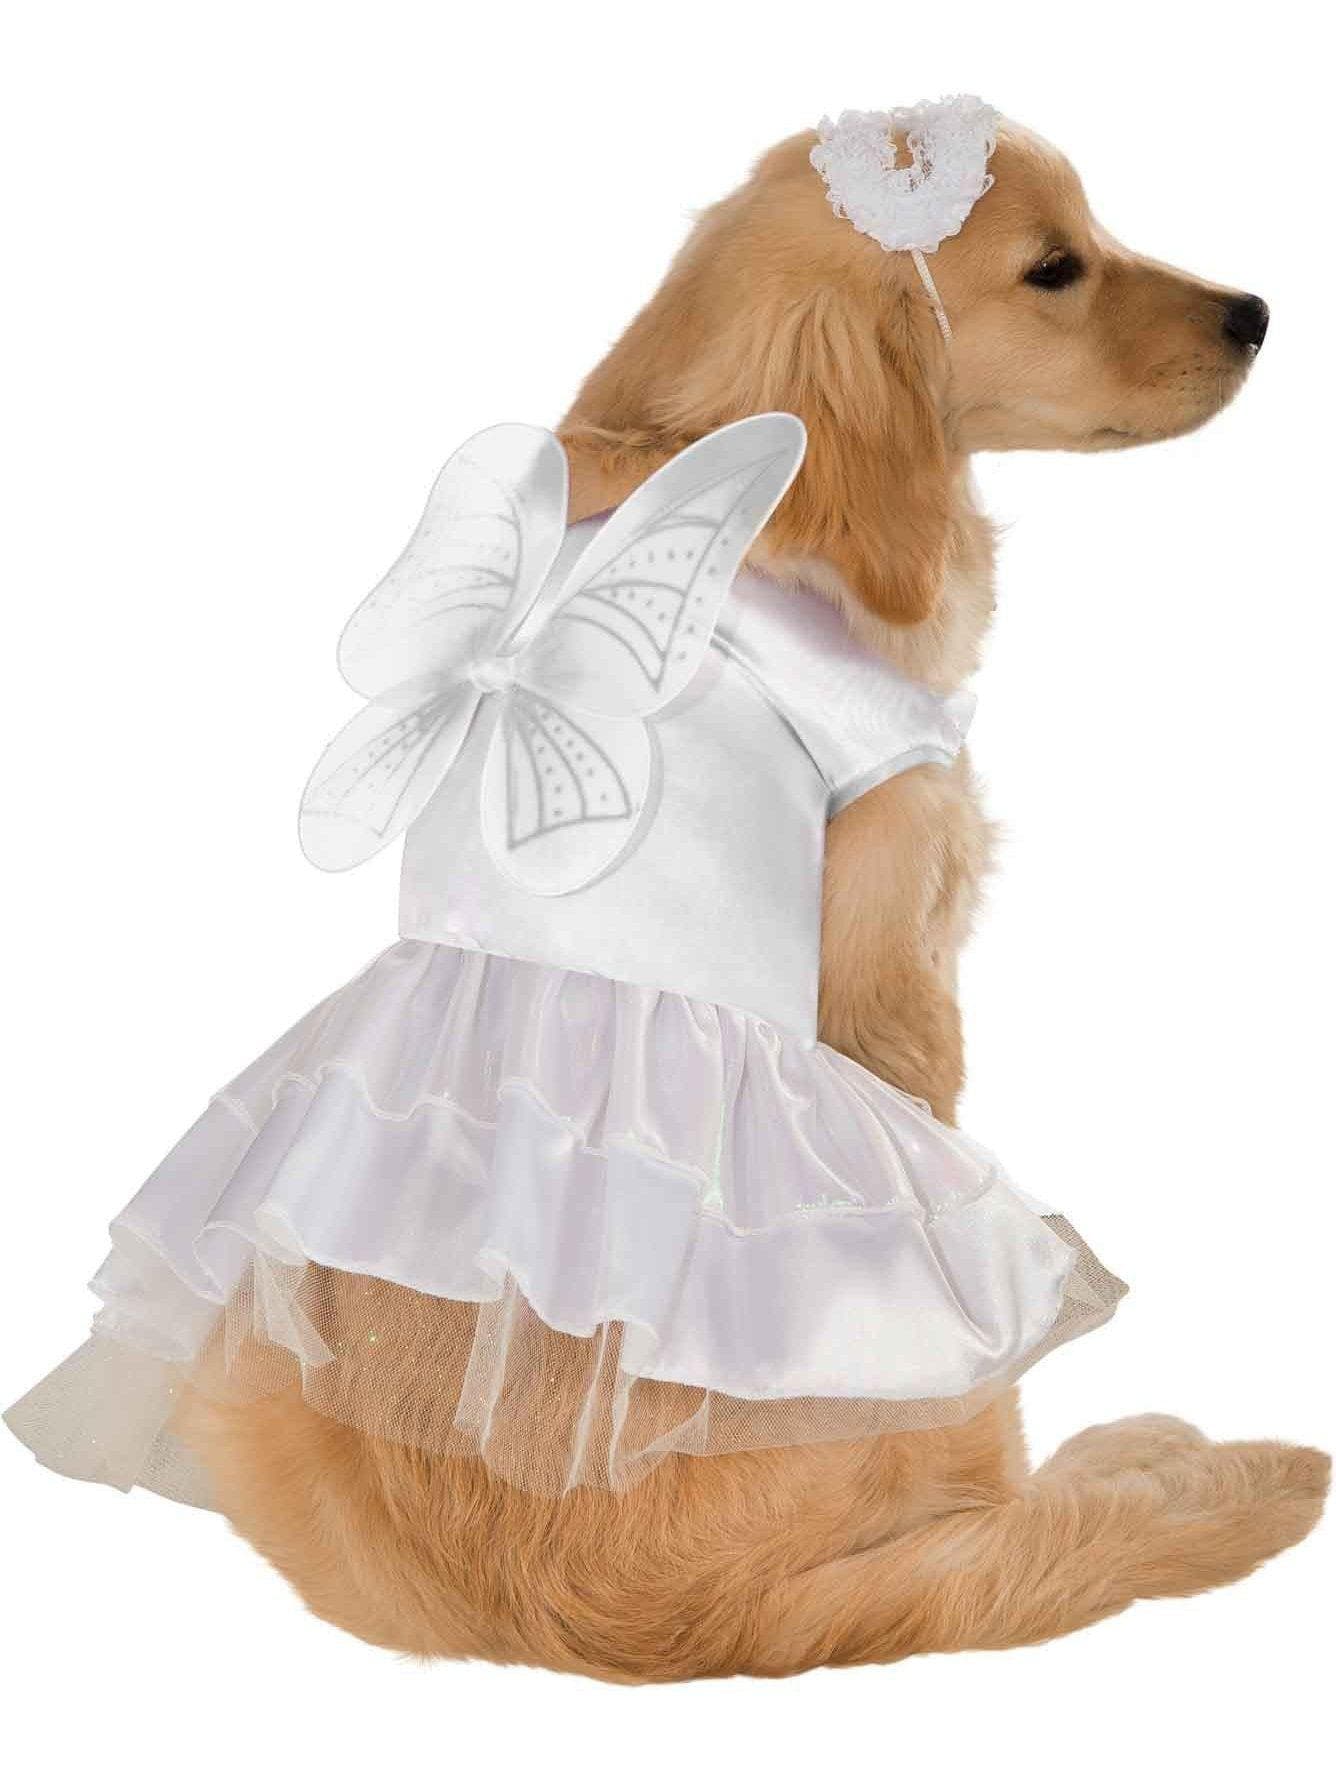 Pet Angel Costume - costumes.com